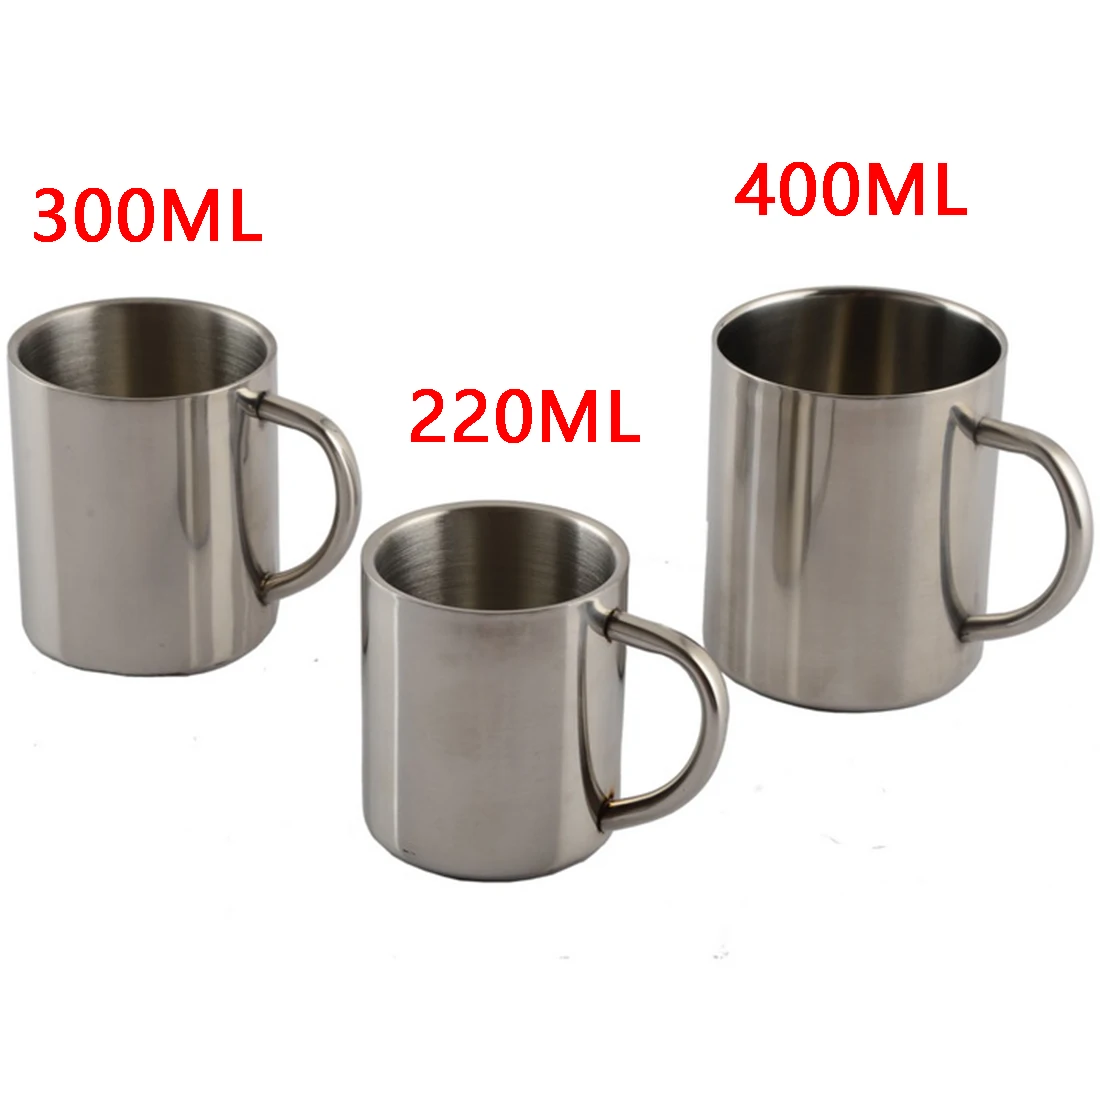 

Travel Tumbler Coffee Mug Tea Cup Double Walled 1pc 220ml 300ml 400ml Stainless Steel Portable Mug Cup Double Wall